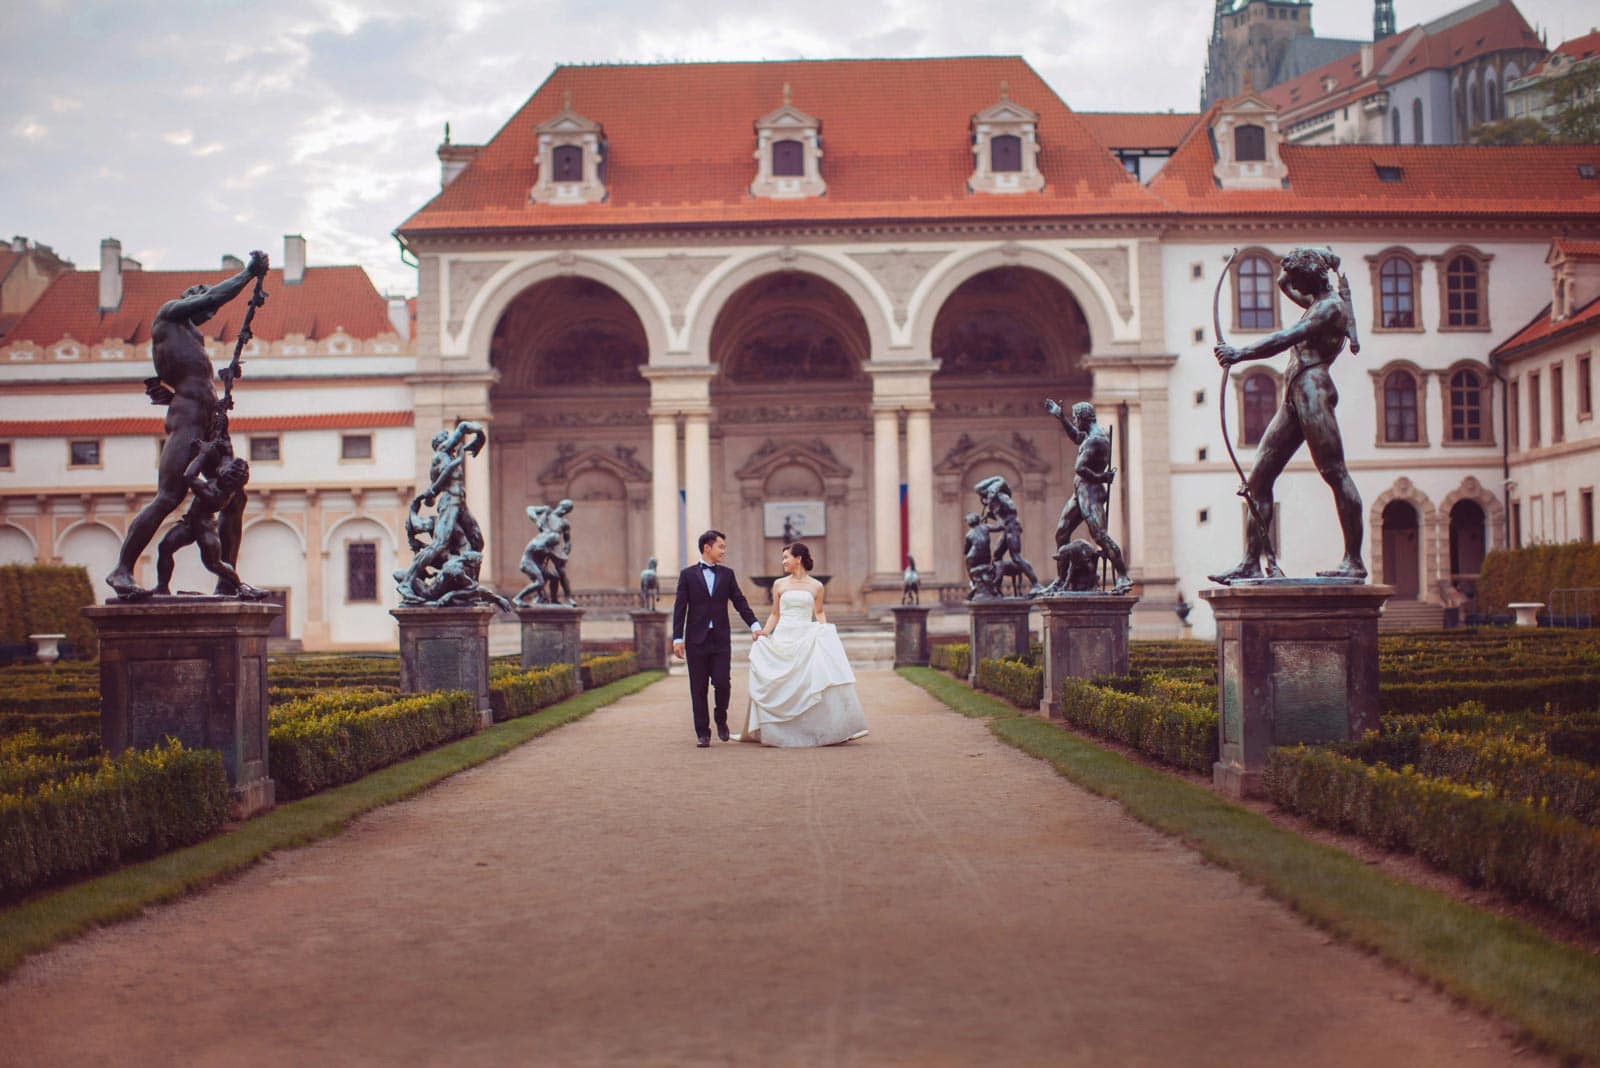 Enzo & Ray's Prague pre wedding portrait session and wedding proposal by American Luxury Fine Art Wedding Photographer Kurt Vinion.